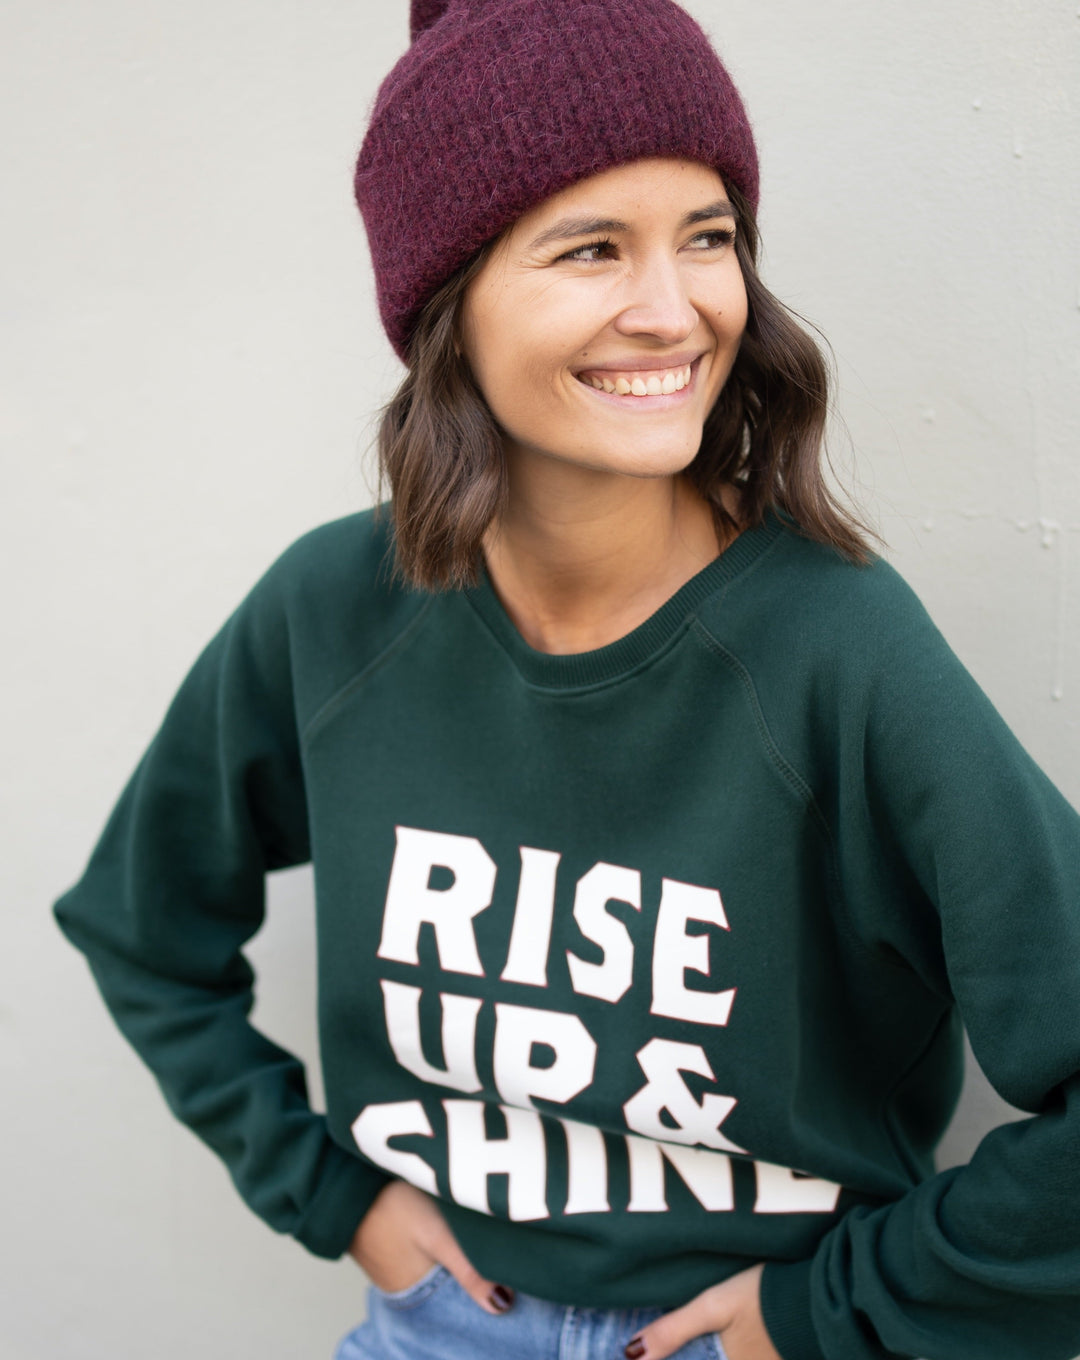 Rise Up & Shine Sweatshirt (green)